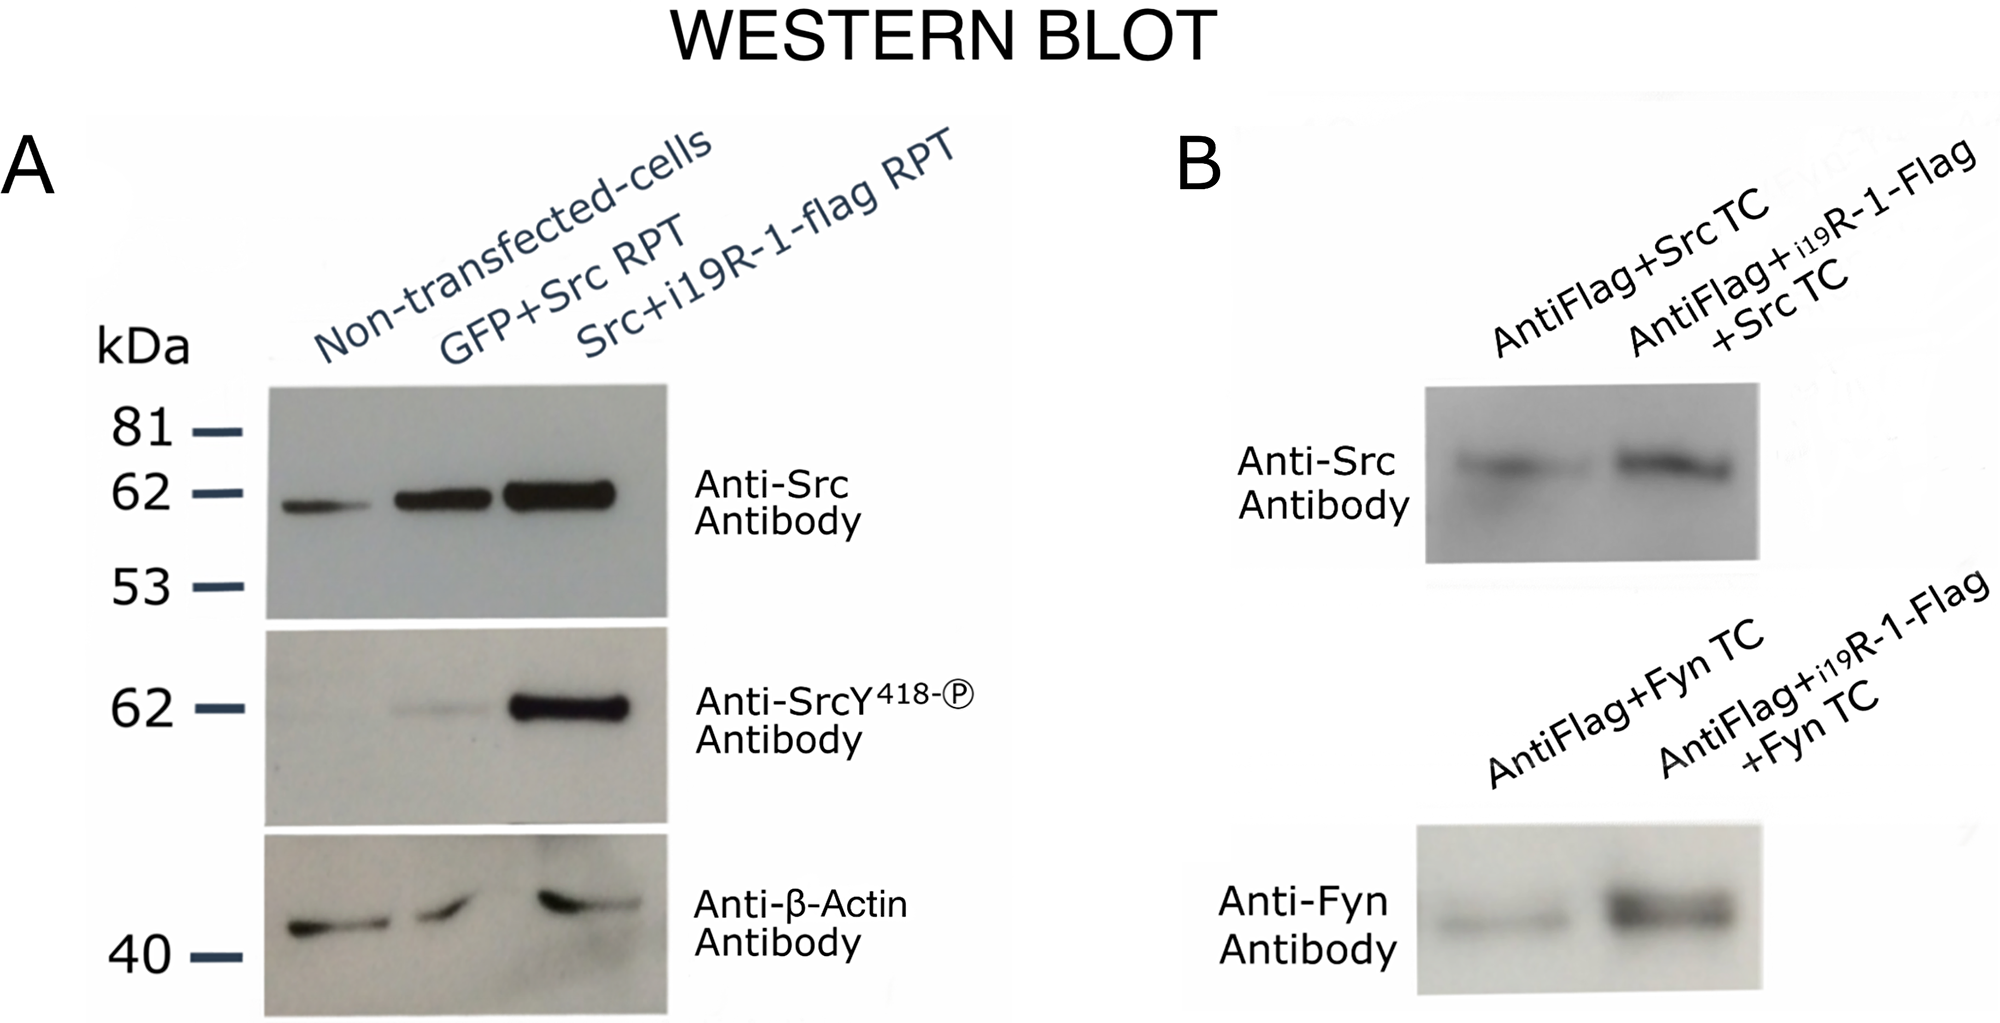 Western blot analysis showing transphosphorylating activity and binding of i19VEGFR-1 on Src kinases.